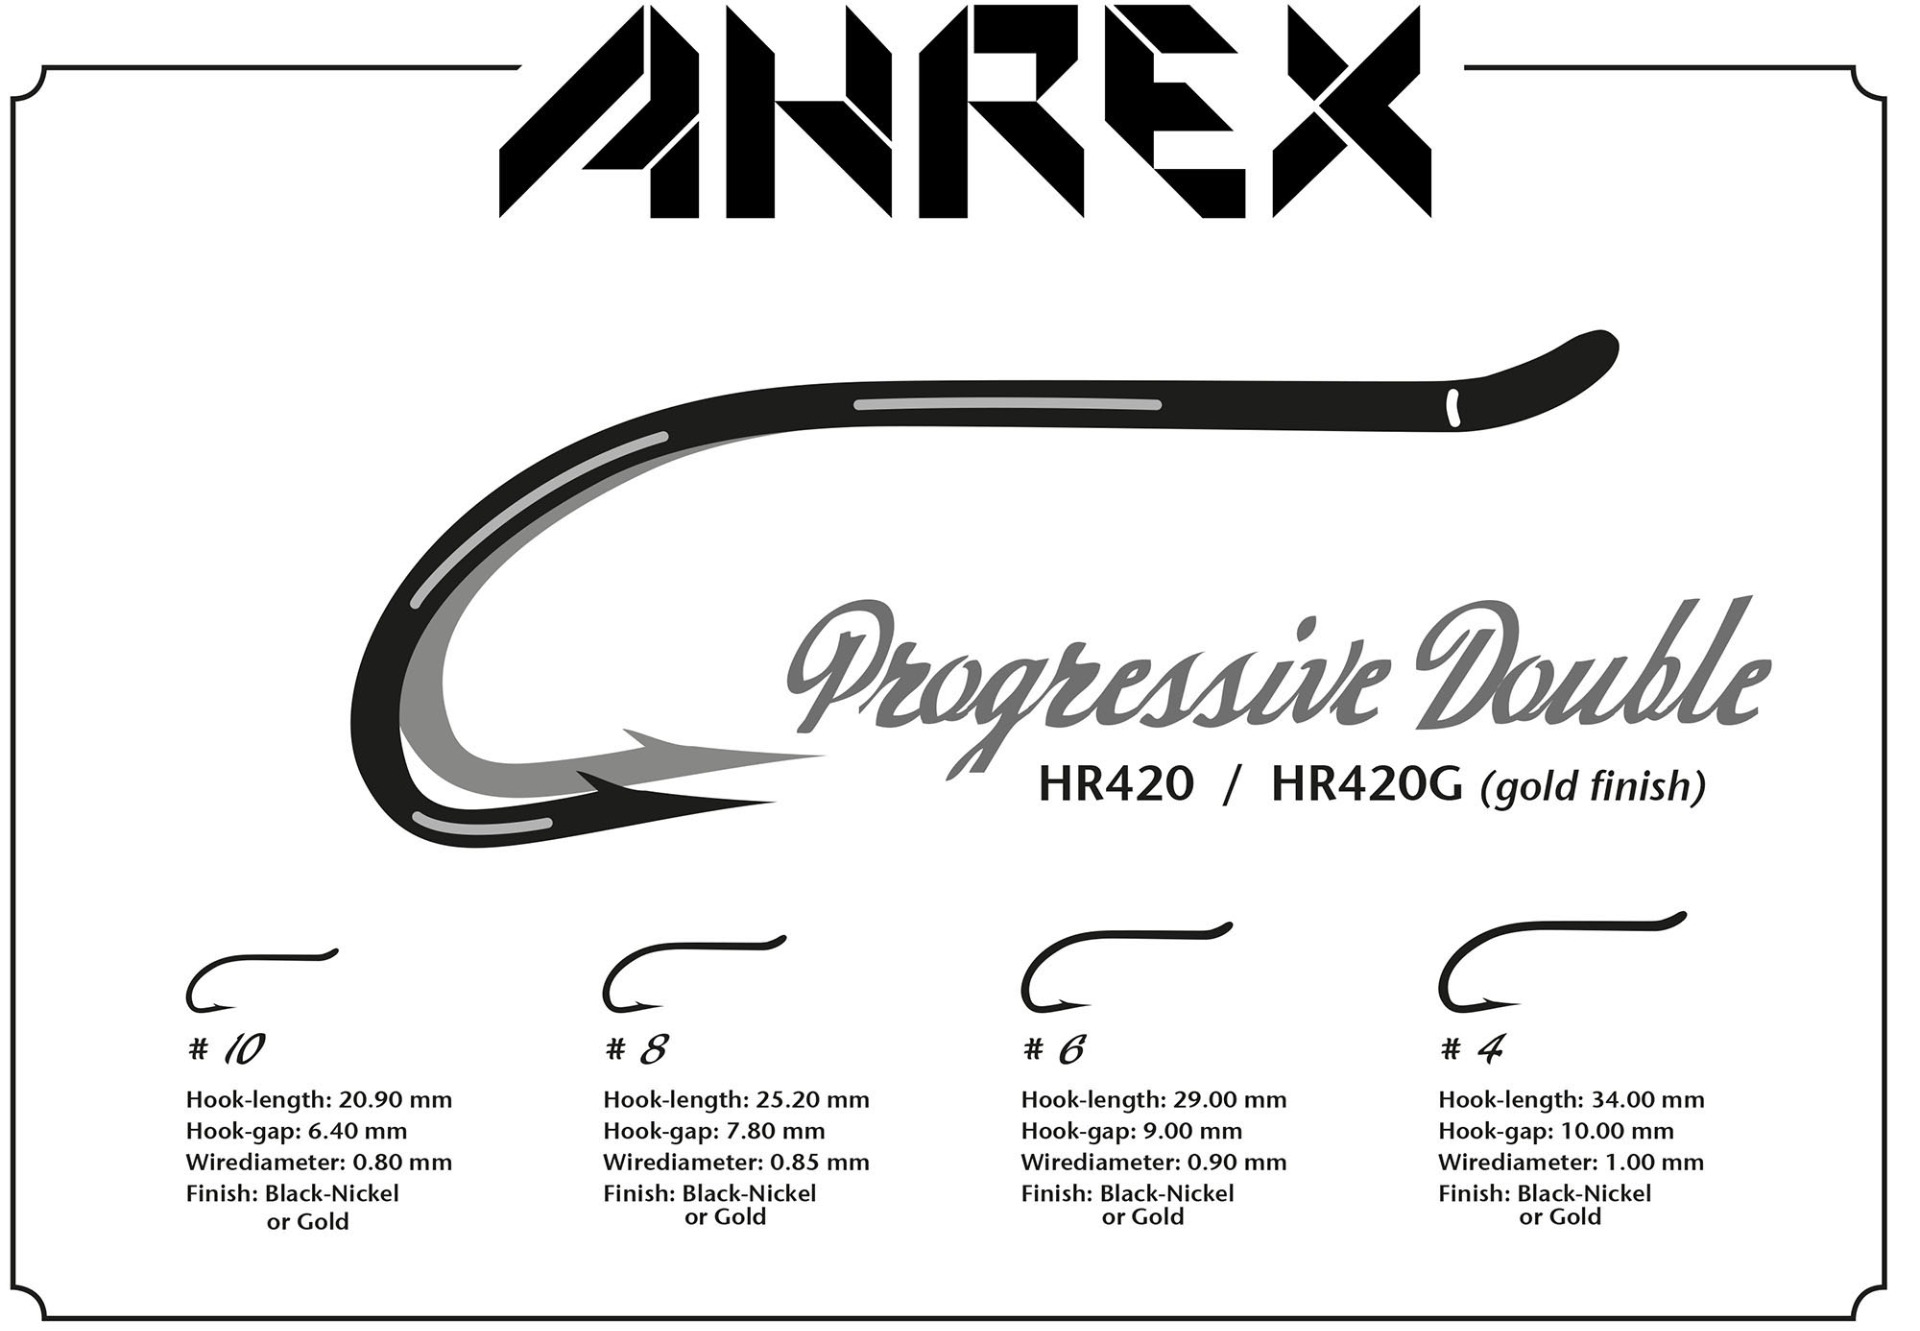 Ahrex Progressive Double Gold #10